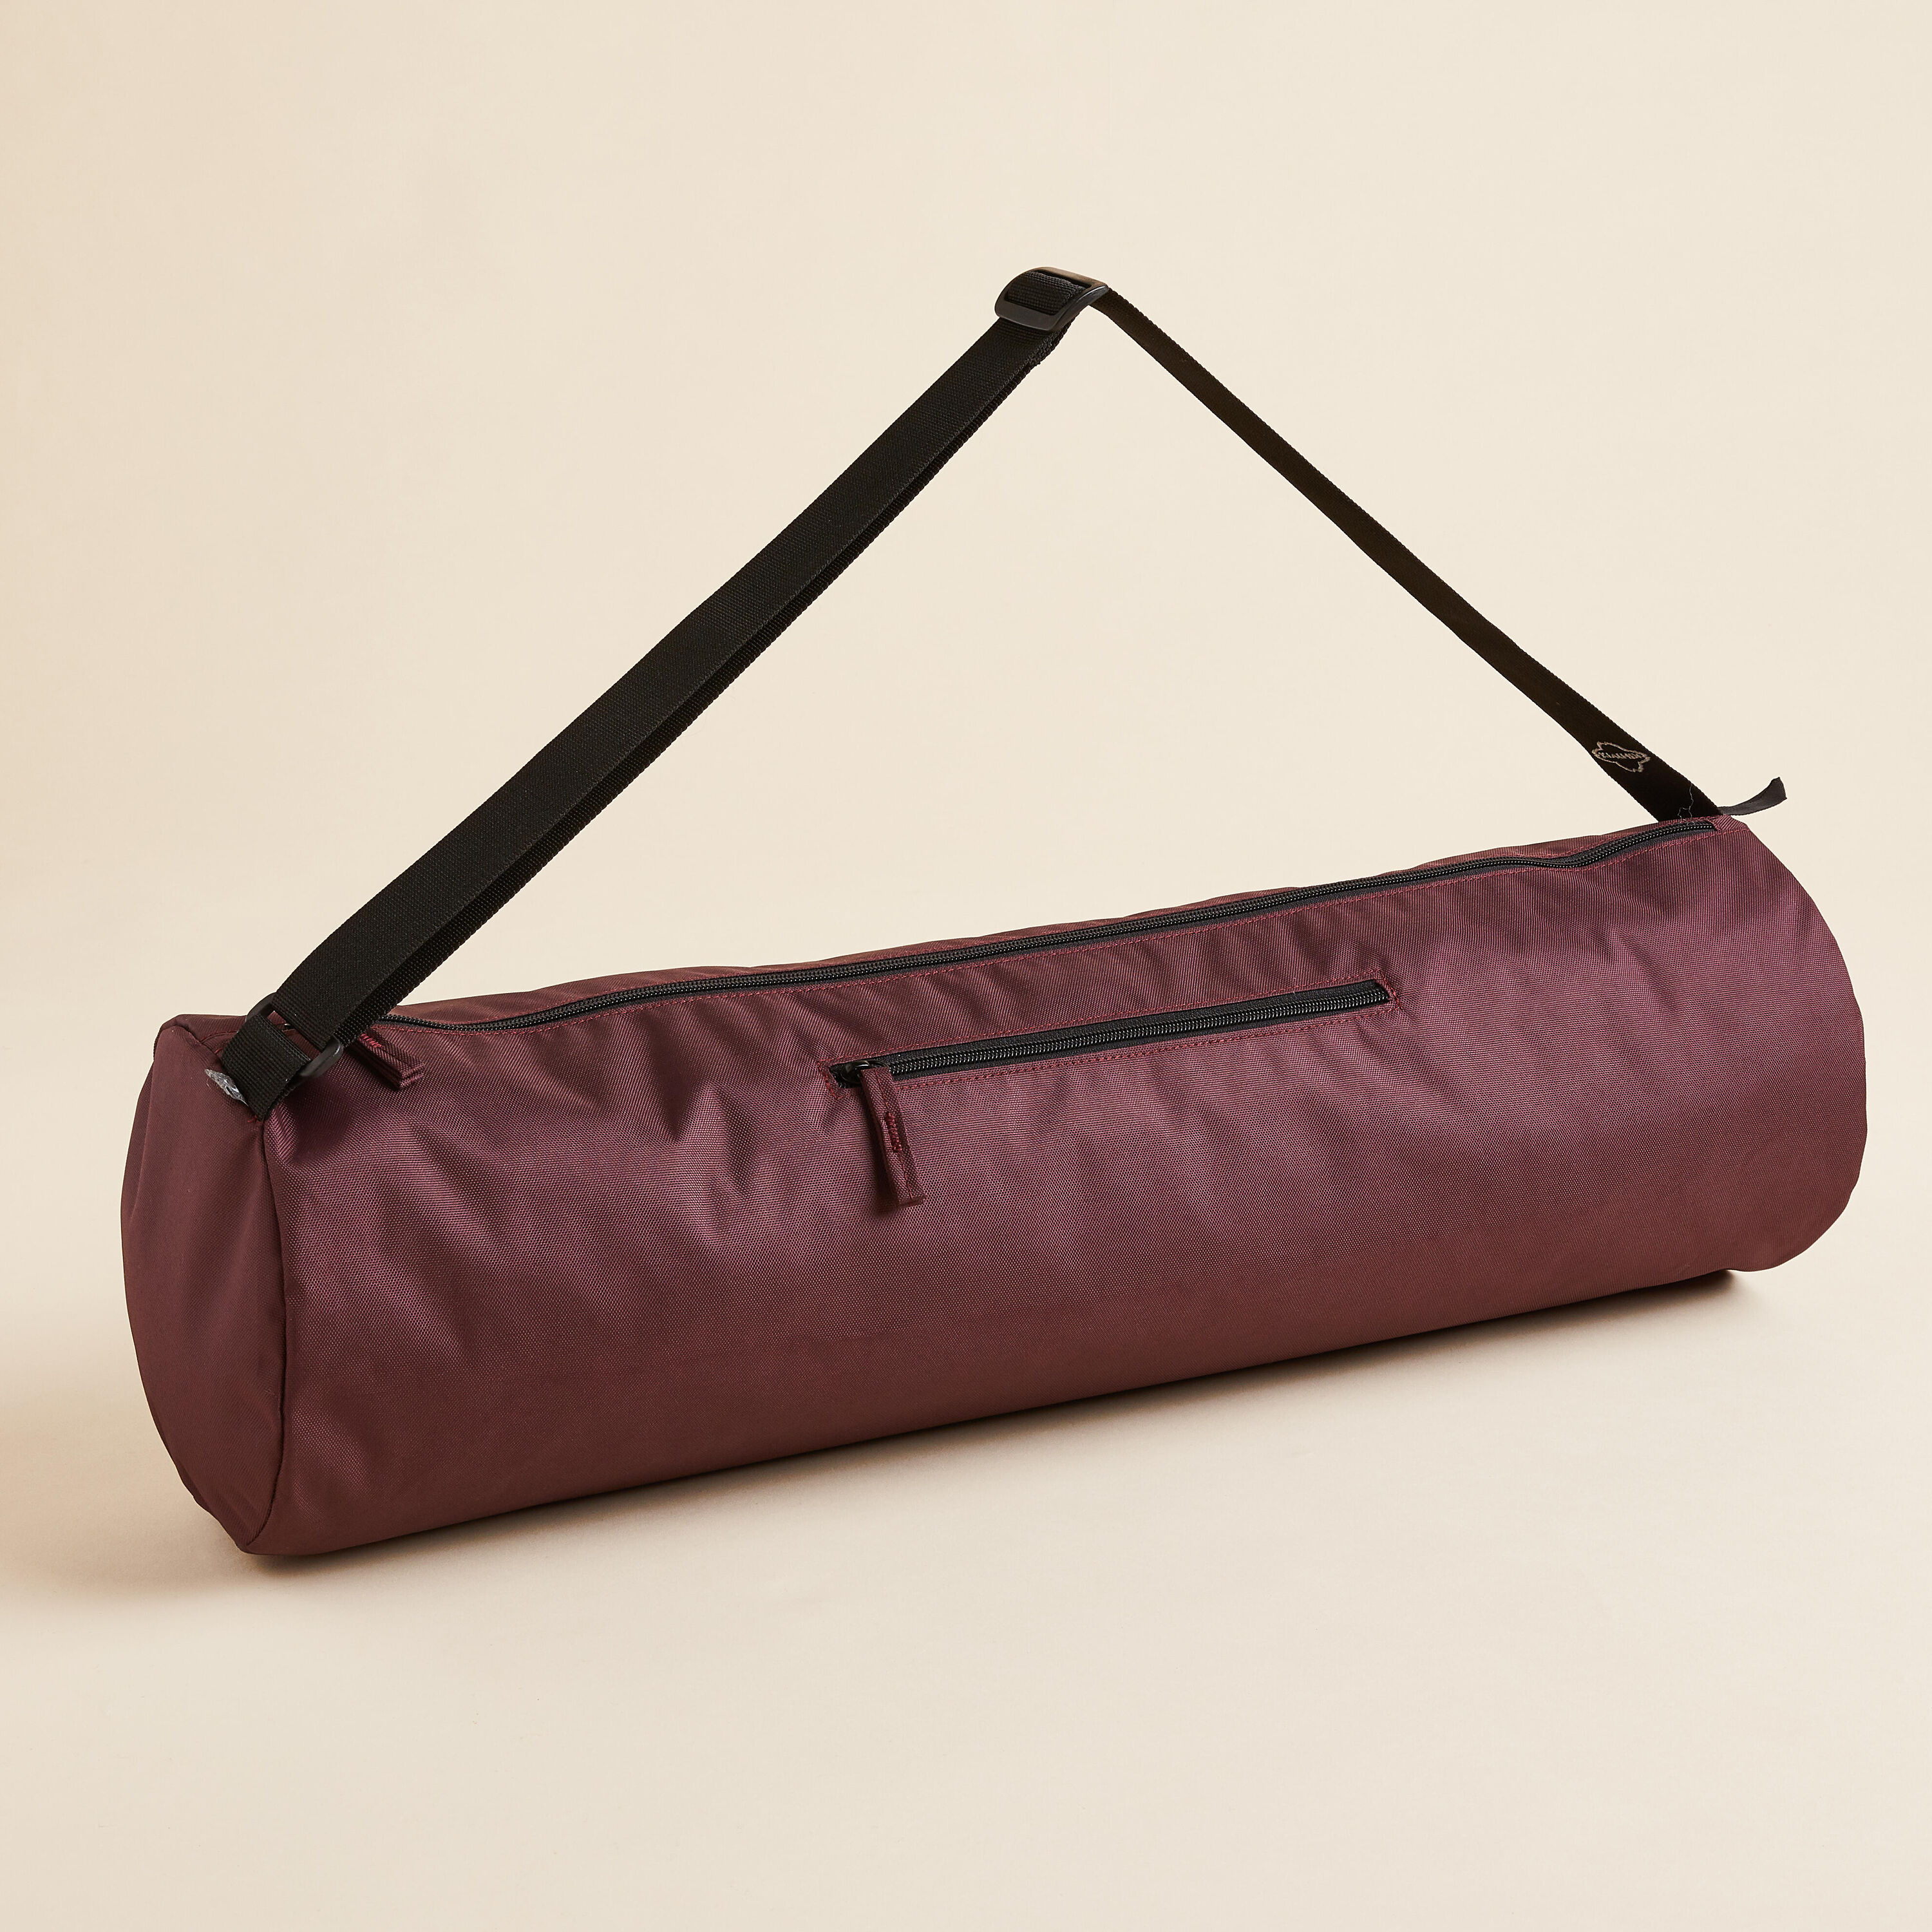 KIMJALY Yoga Mat Bag 23 L - Burgundy